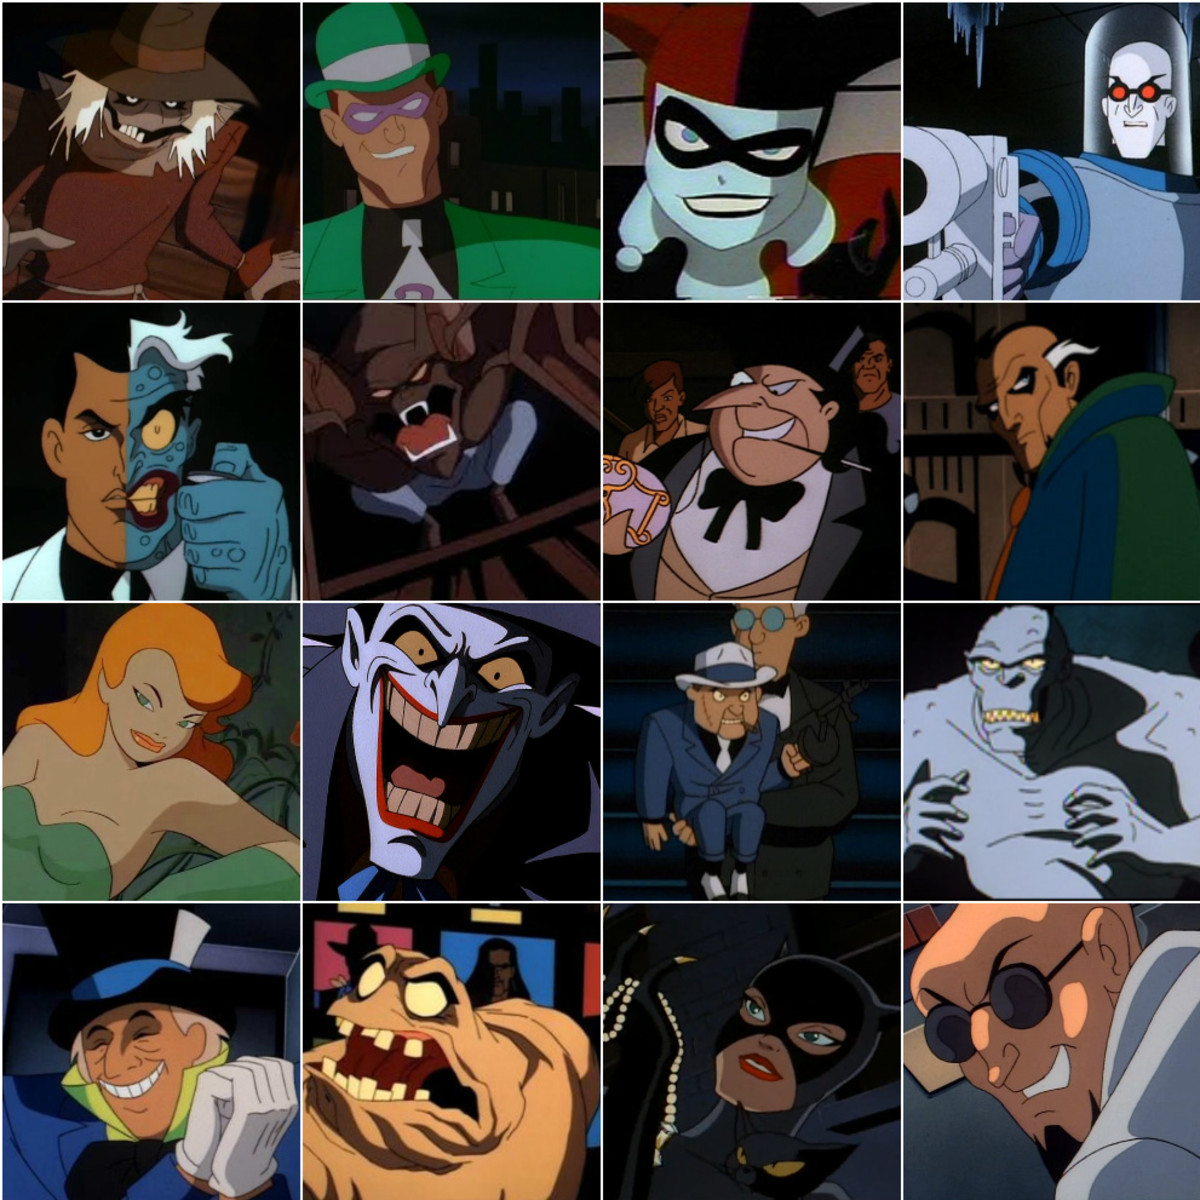 Rogues' Gallery of Batman villains.